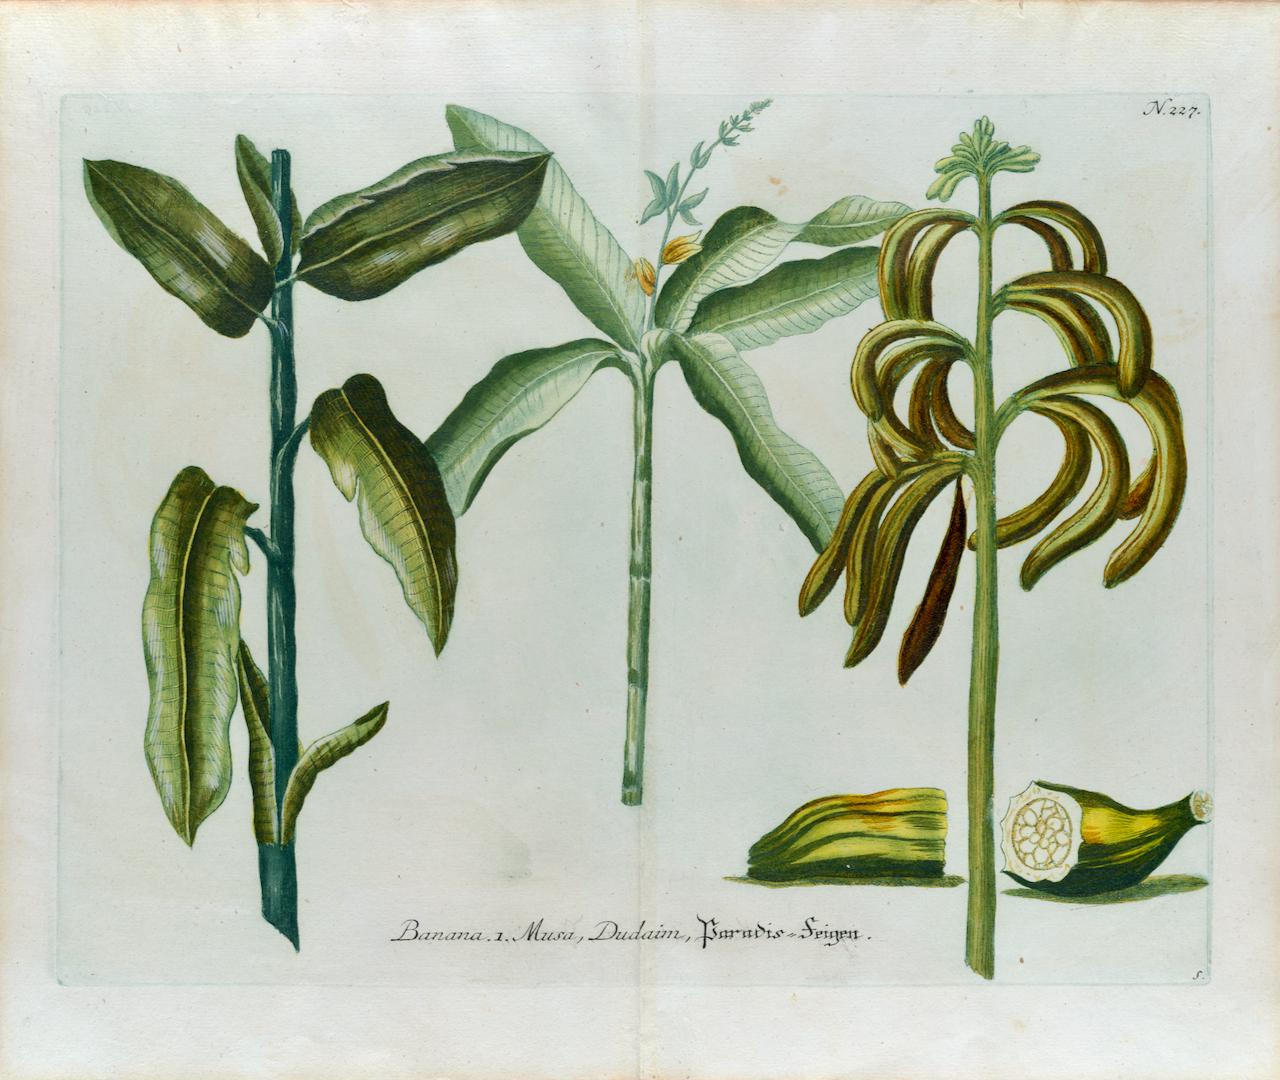 Johann Wilhelm Weinmann Still-Life Print - Banana Plants: An 18th Century Hand-colored Botanical Engraving by J. Weinmann